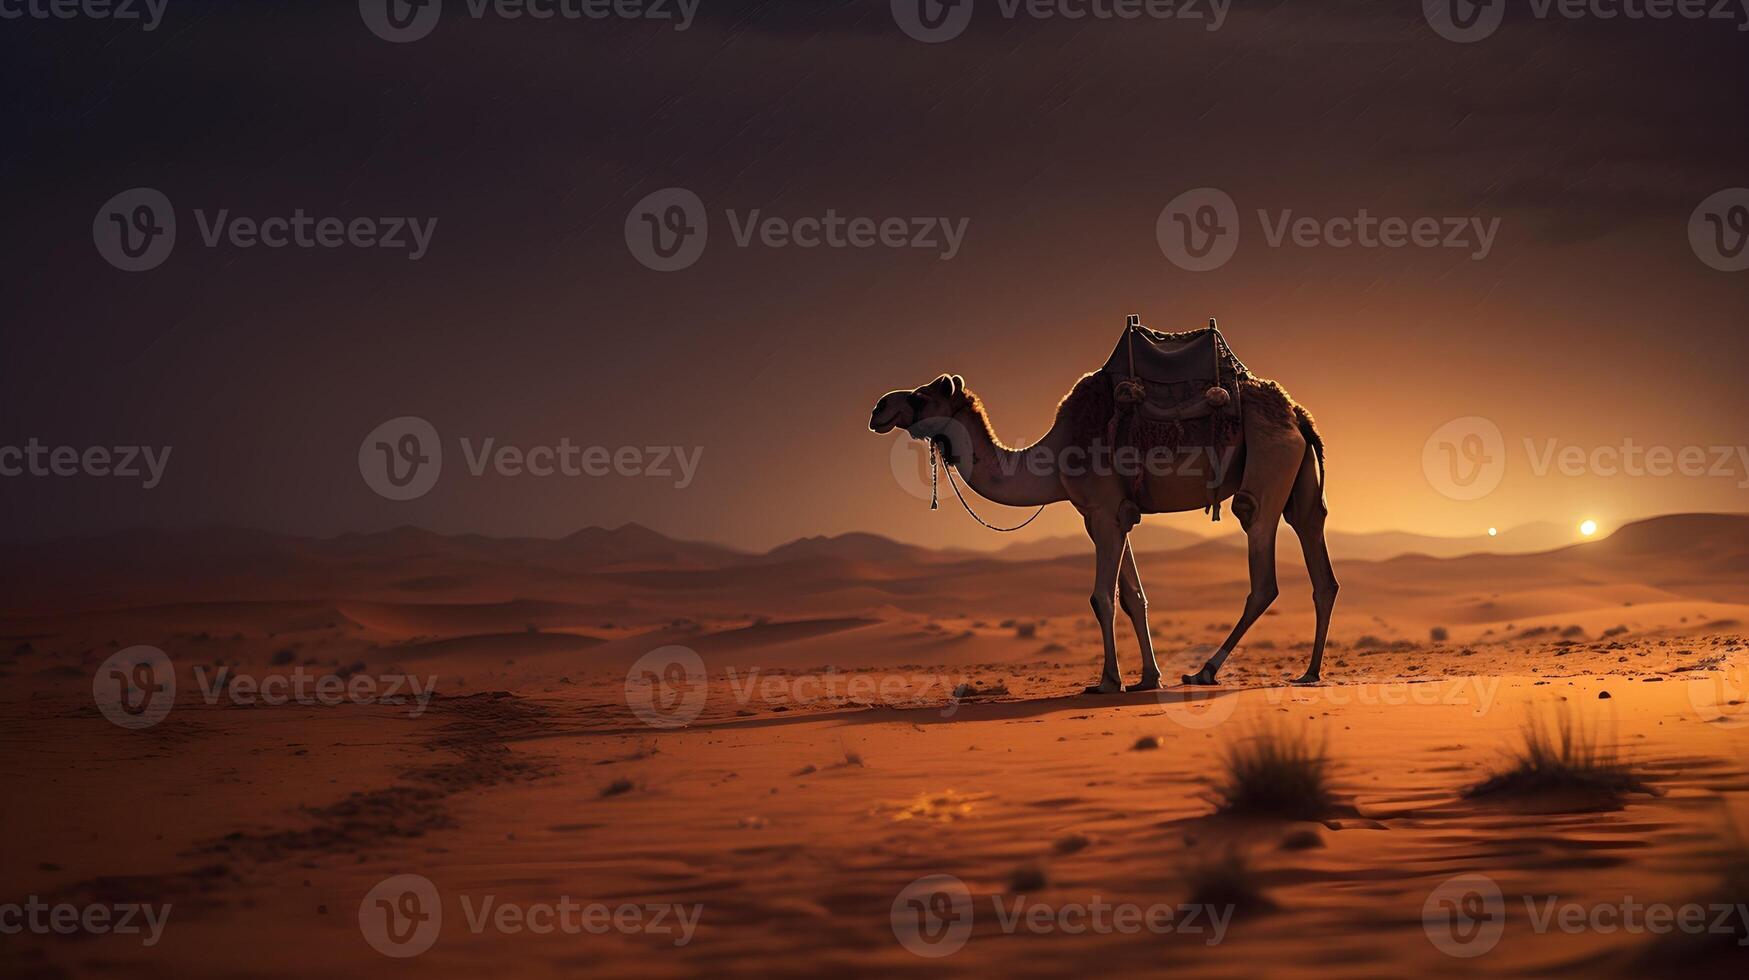 A camel walks in the sand desert photo